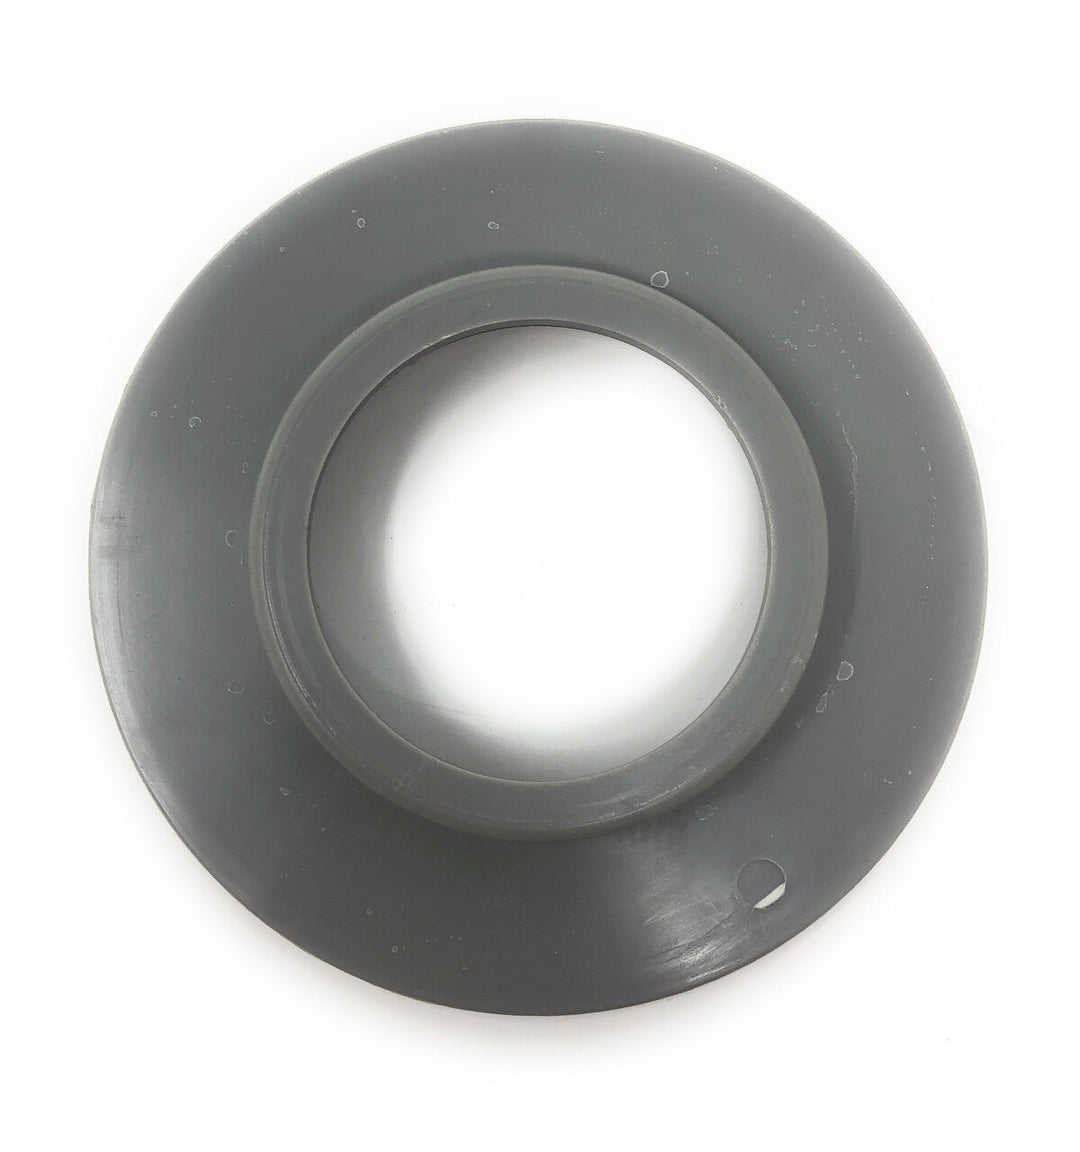 A&A Style 2 Vinyl Collar Top Plate (Light Gray) - Underside